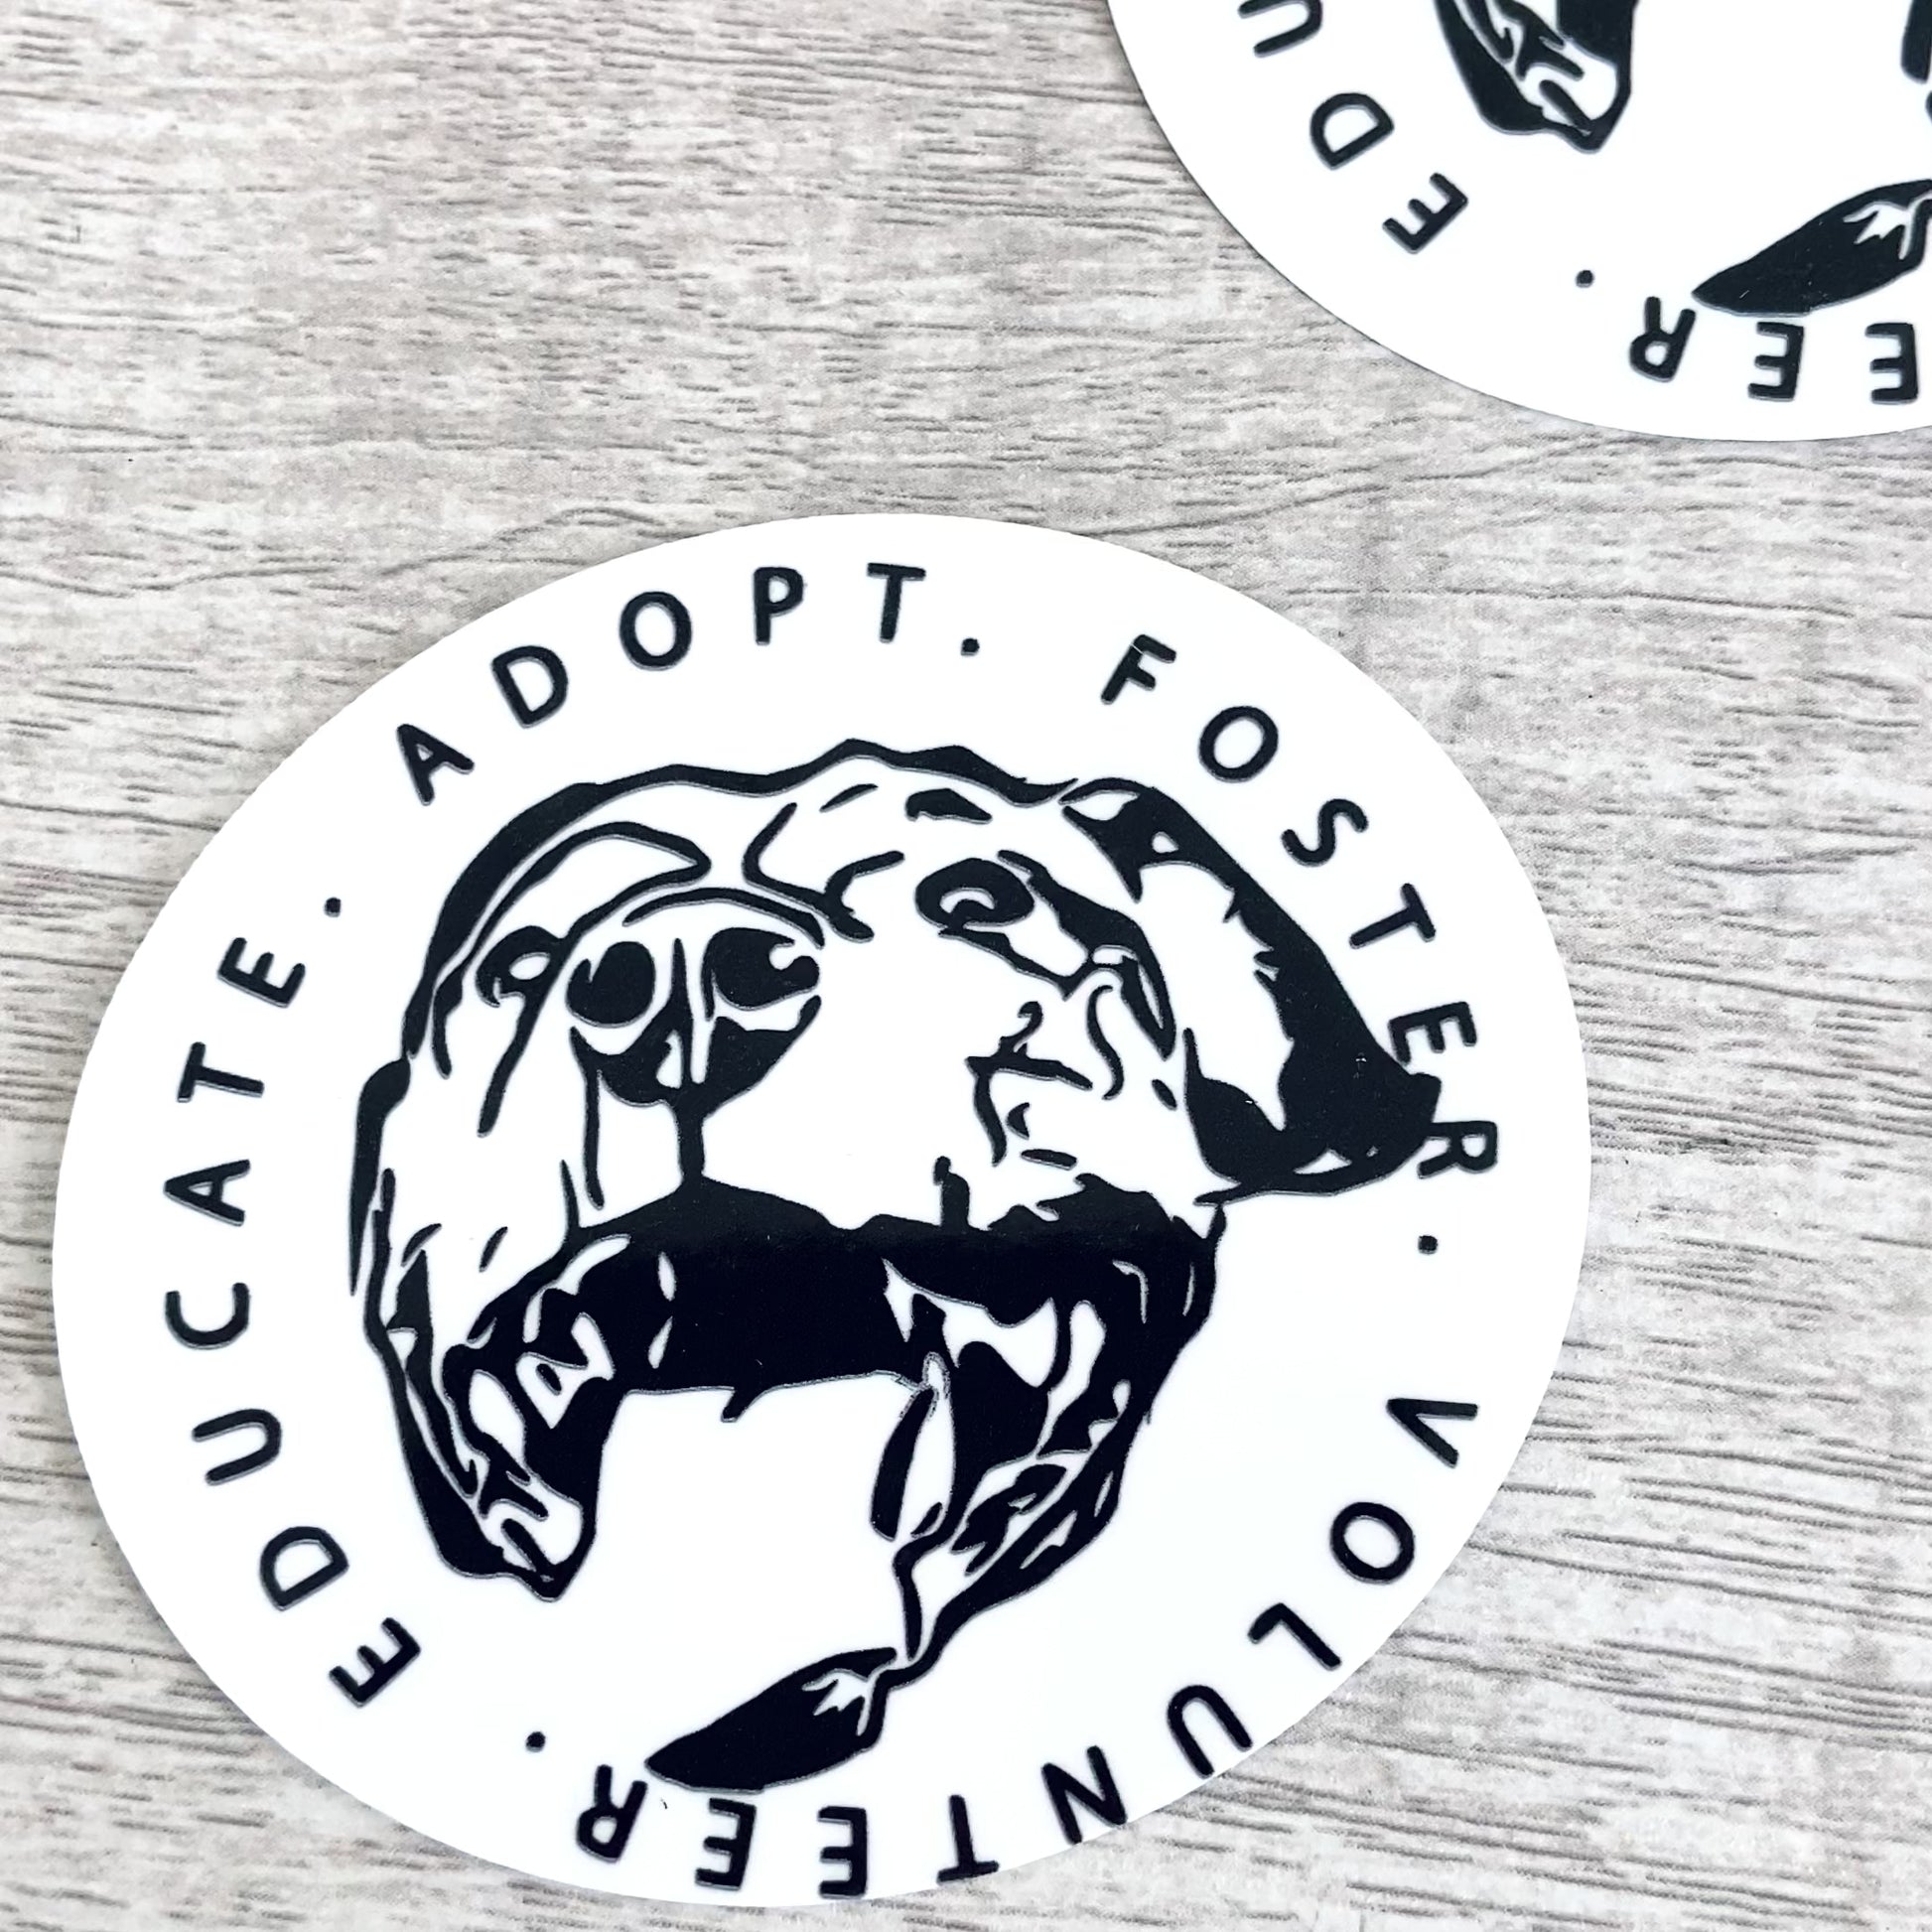 Adopt Educate Foster Volunteer Sticker - sweetsherriloudesigns - 10% of profits donated to SPCA animal rescue